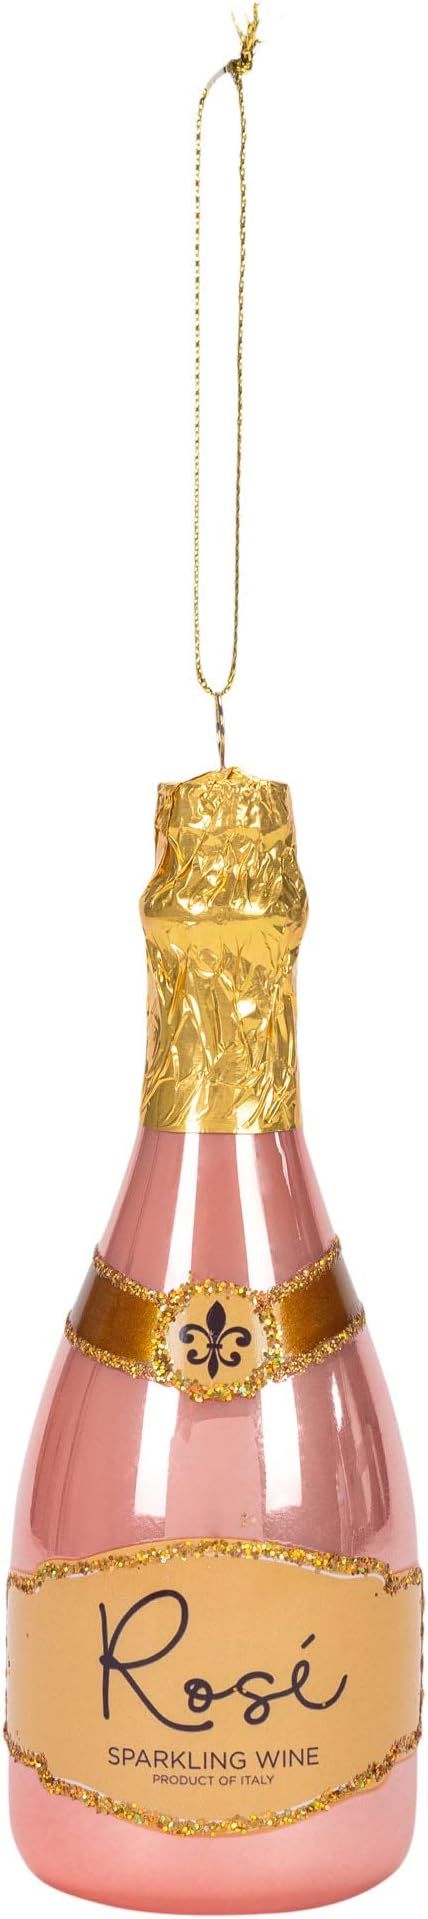 Raz 4052892 Christmas Catalog Rose Sparkling Wine Hanging Ornament, 6-inch Height, Glass | Amazon (US)